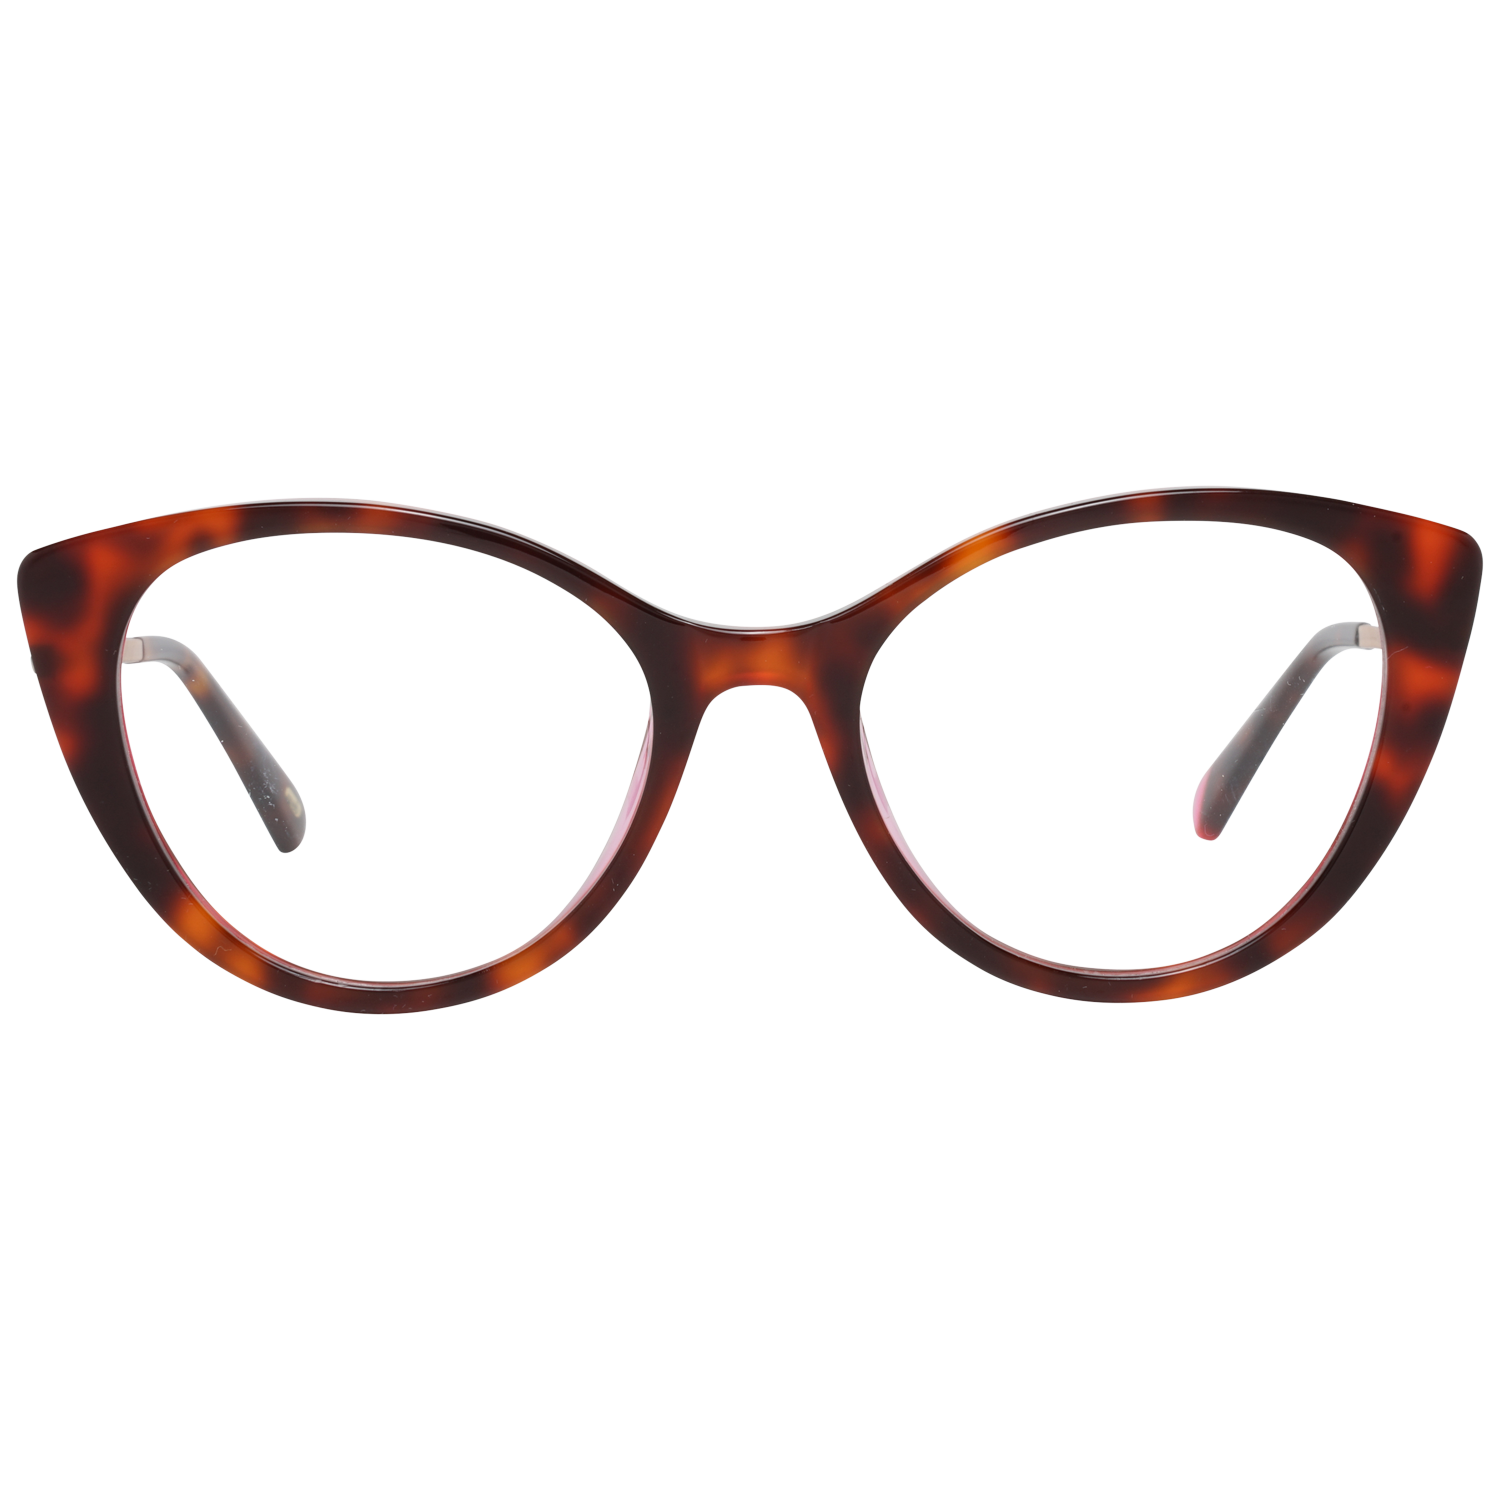 Web Frames Web Prescription Glasses Optical Frame WE5288 056 51 Eyeglasses Eyewear UK USA Australia 